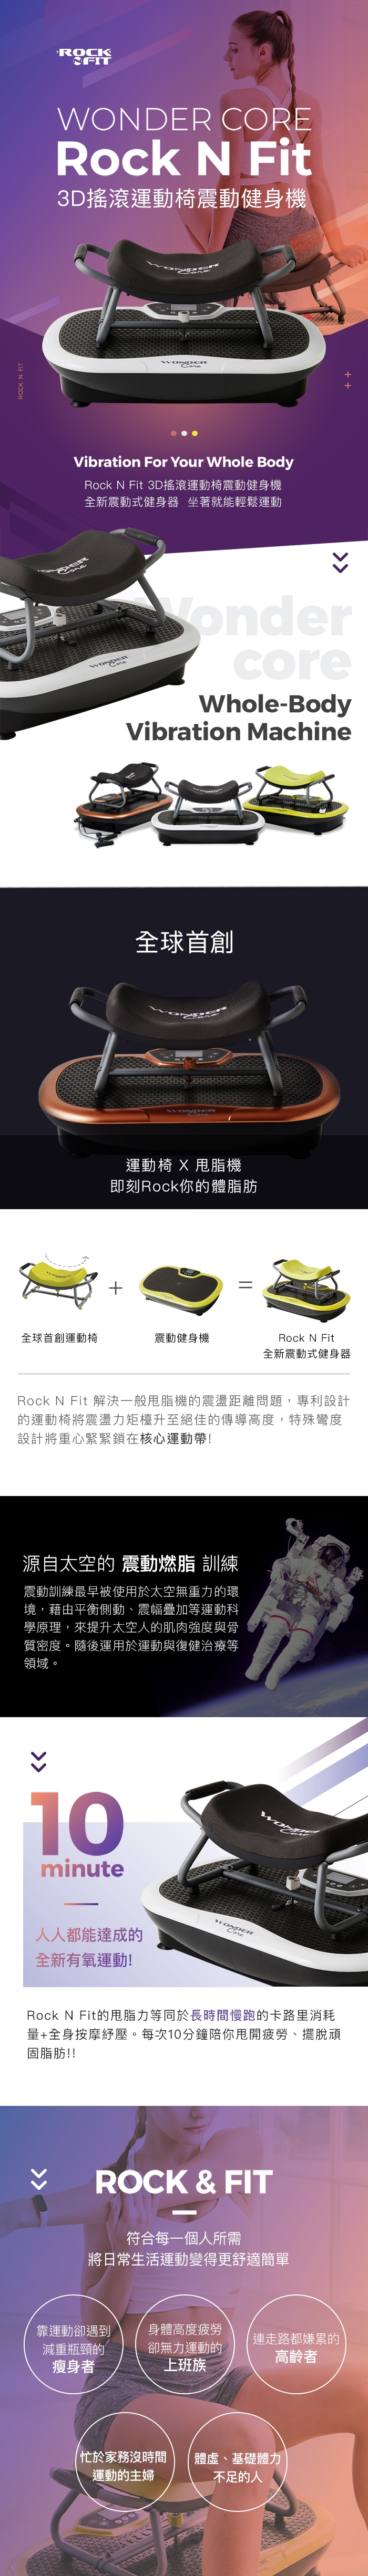 Wonder Core Rock N Fit 3D搖滾運動椅 震動健身機(玫瑰金)